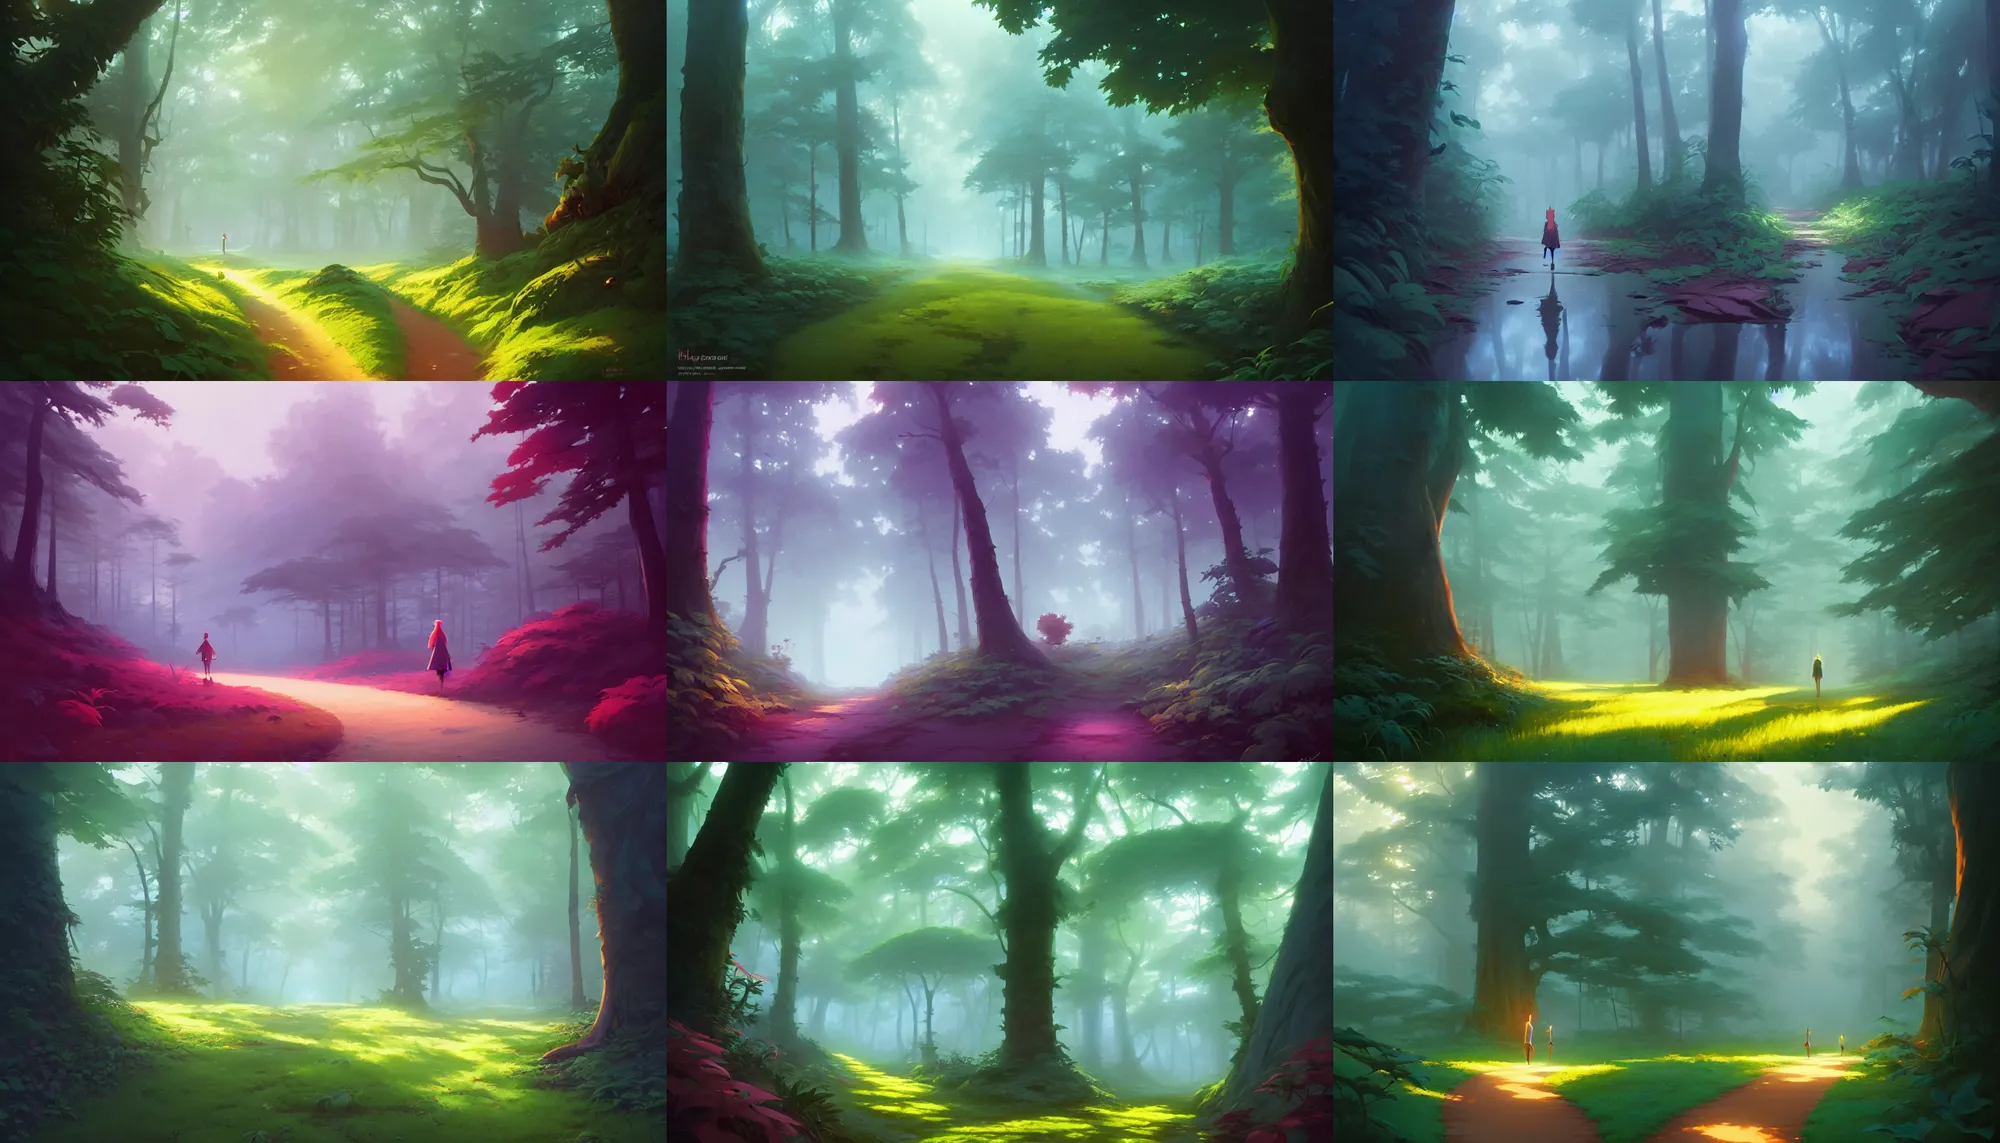 Prompt: path into lush forest, mysterious mist, behance hd by jesper ejsing, by rhads, makoto shinkai and lois van baarle, ilya kuvshinov, rossdraws global illumination